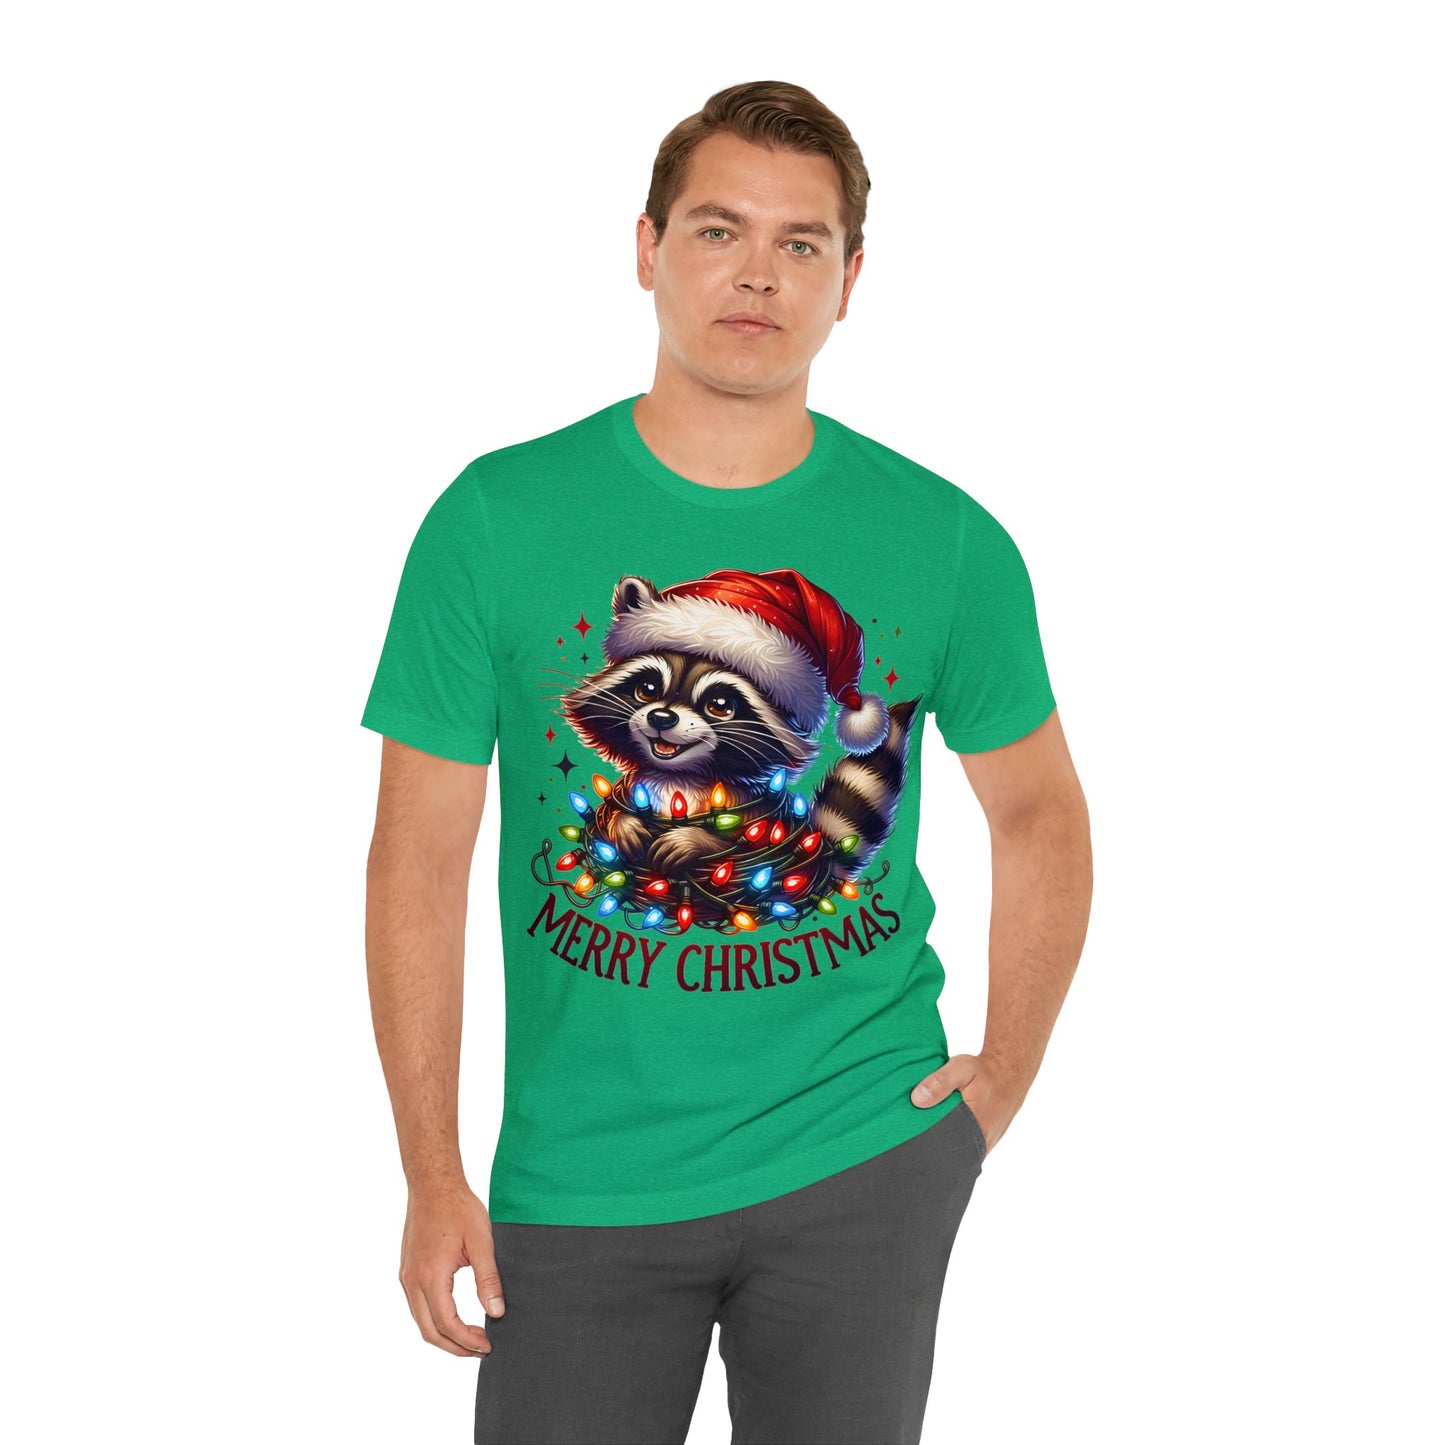 Raccoon Christmas TShirt, Xmas Funny Animal with Santa Hat Christmas Lights Shirt Merry Christmas Tee Happy Holidays Men Women Family